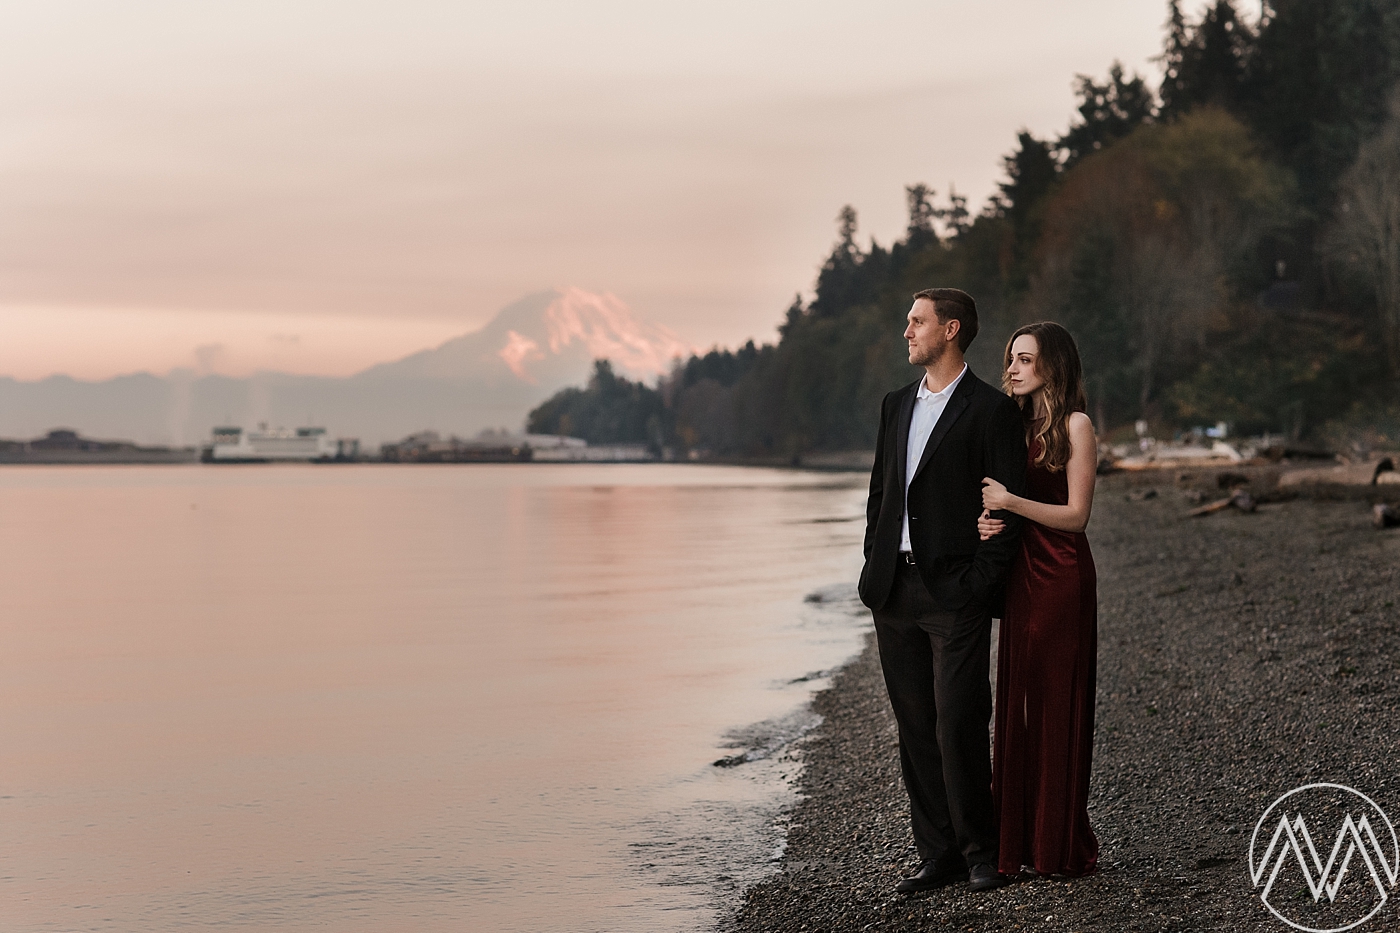 Tacoma Engagement Session at Owen Beach | Megan Montalvo Photography